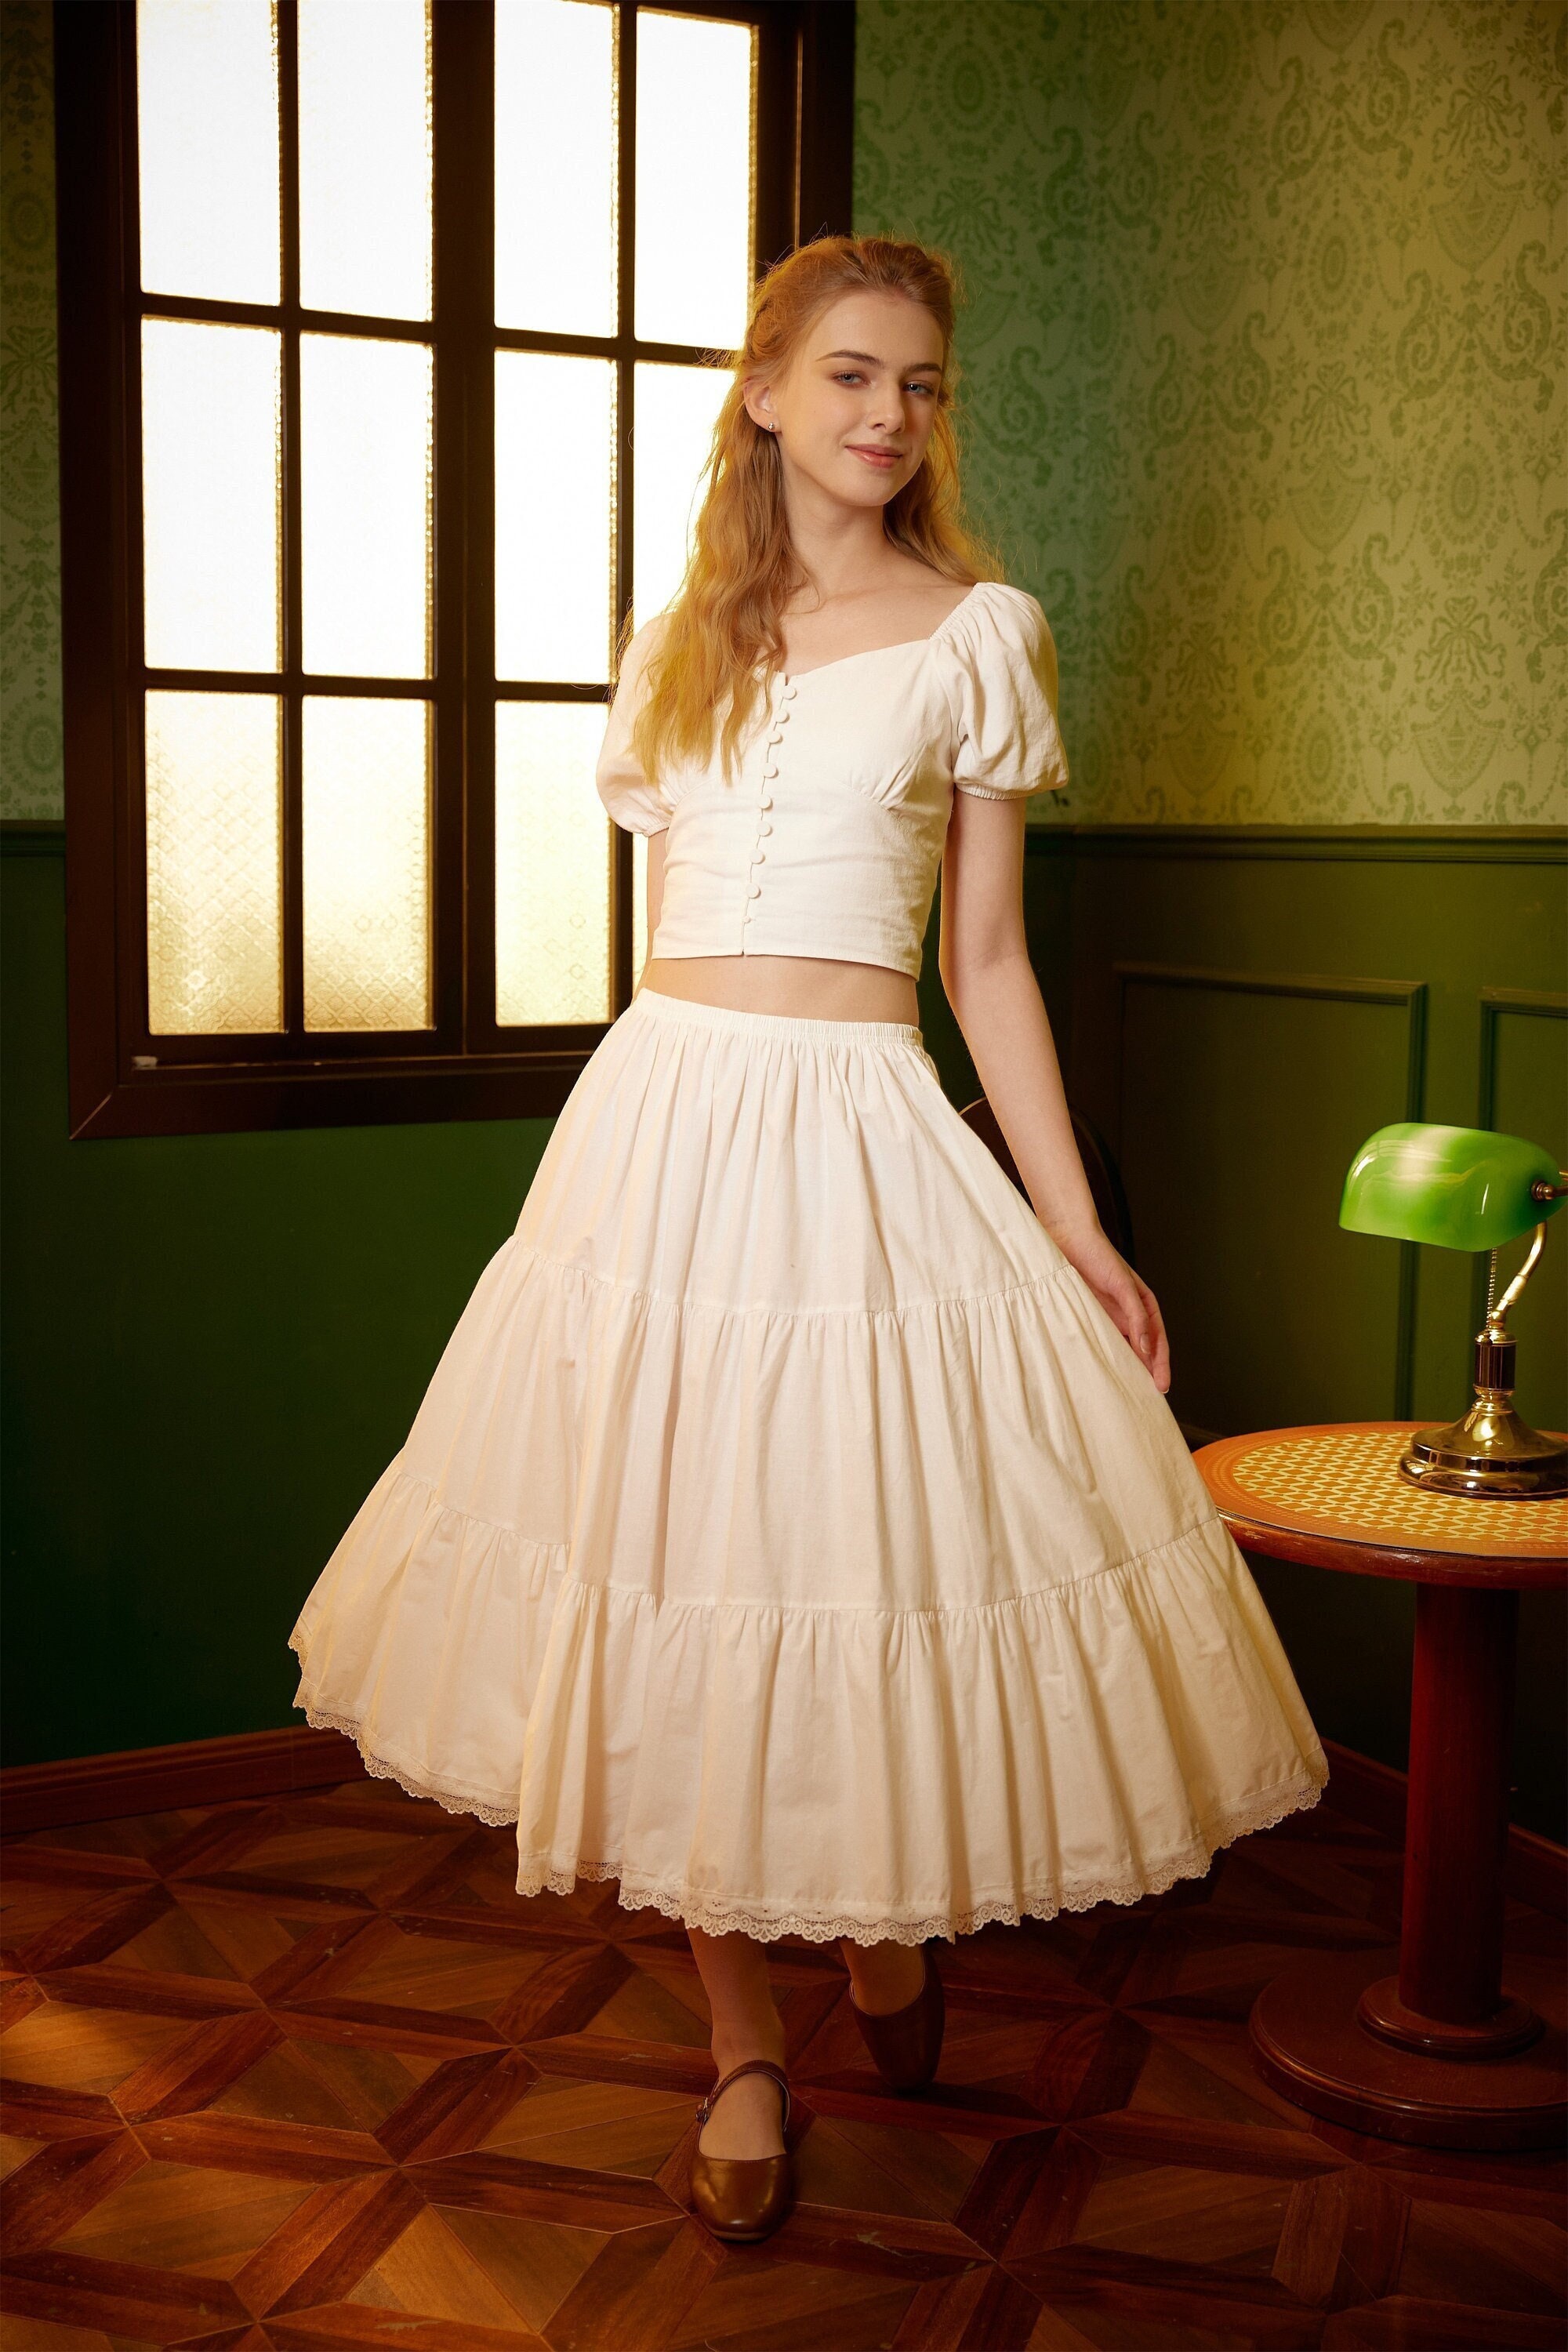 Lady Basic Cotton Petticoat Skirt Thin Underskirt Frill Slips Underdress  Midi